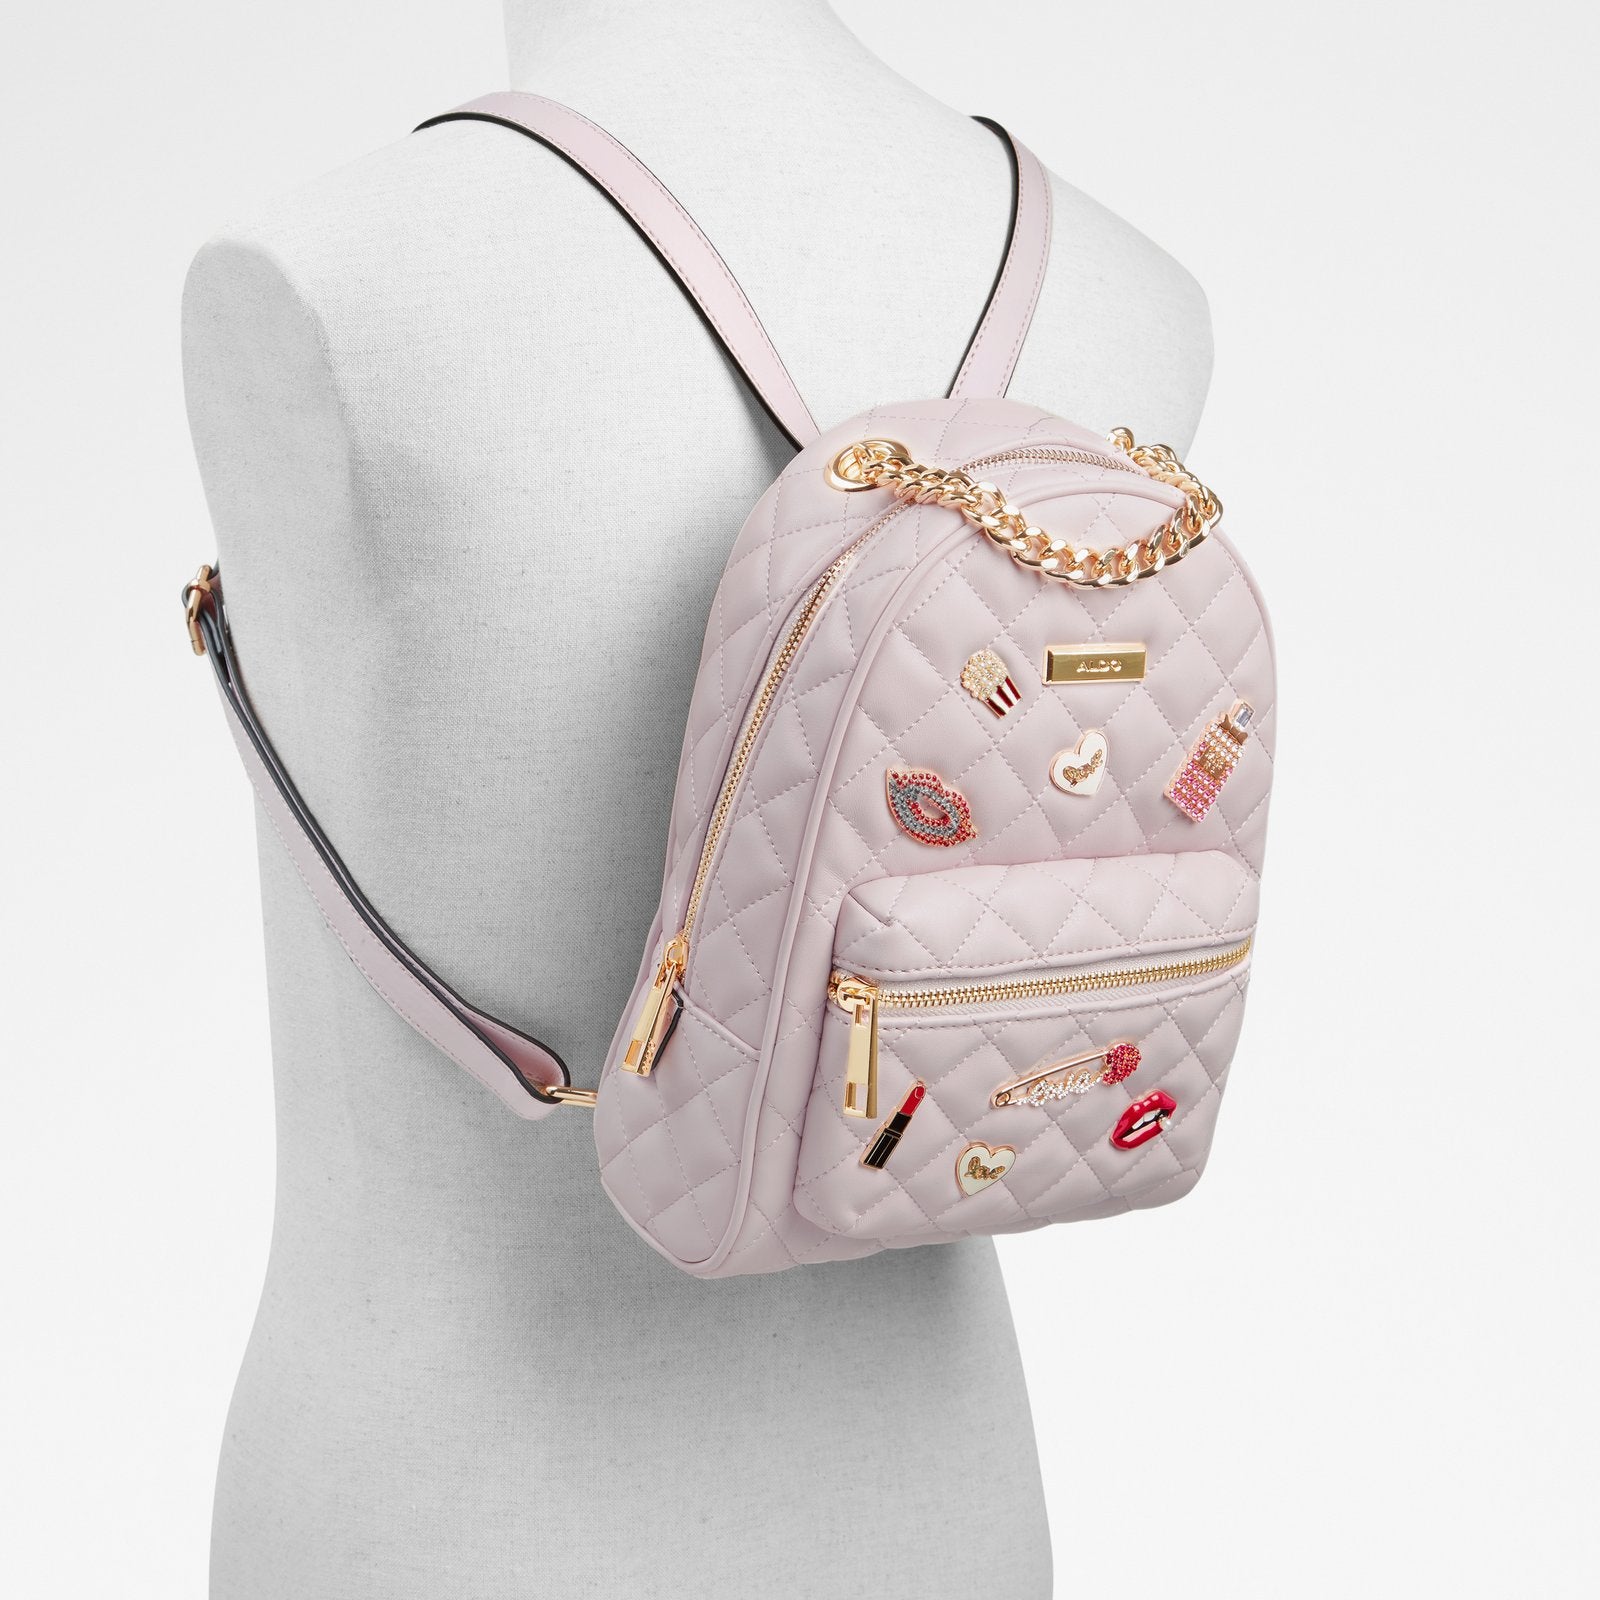 Lovette Bag - Light Pink - ALDO KSA